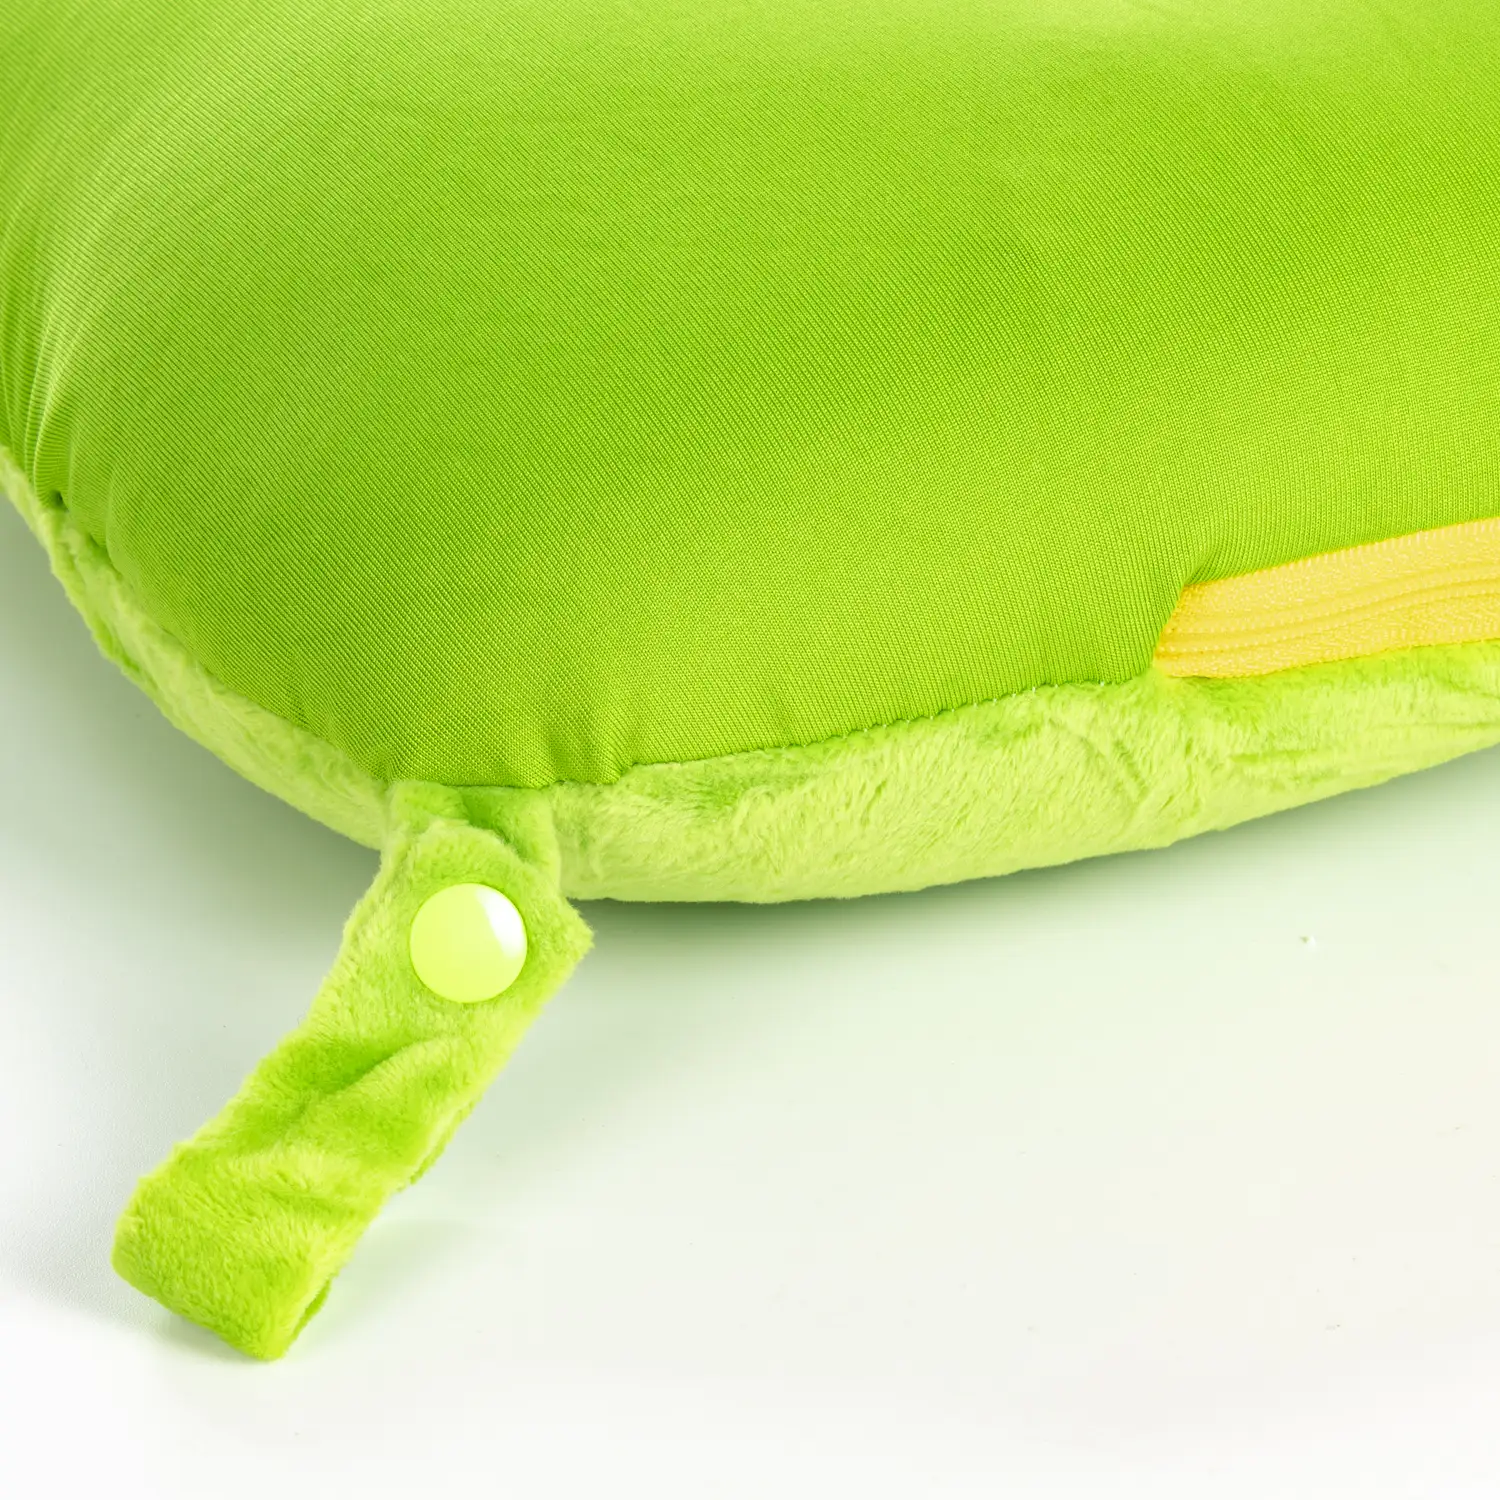 Tortuga de peluche convertible en almohada de viaje cojín cervical, 2 en 1.